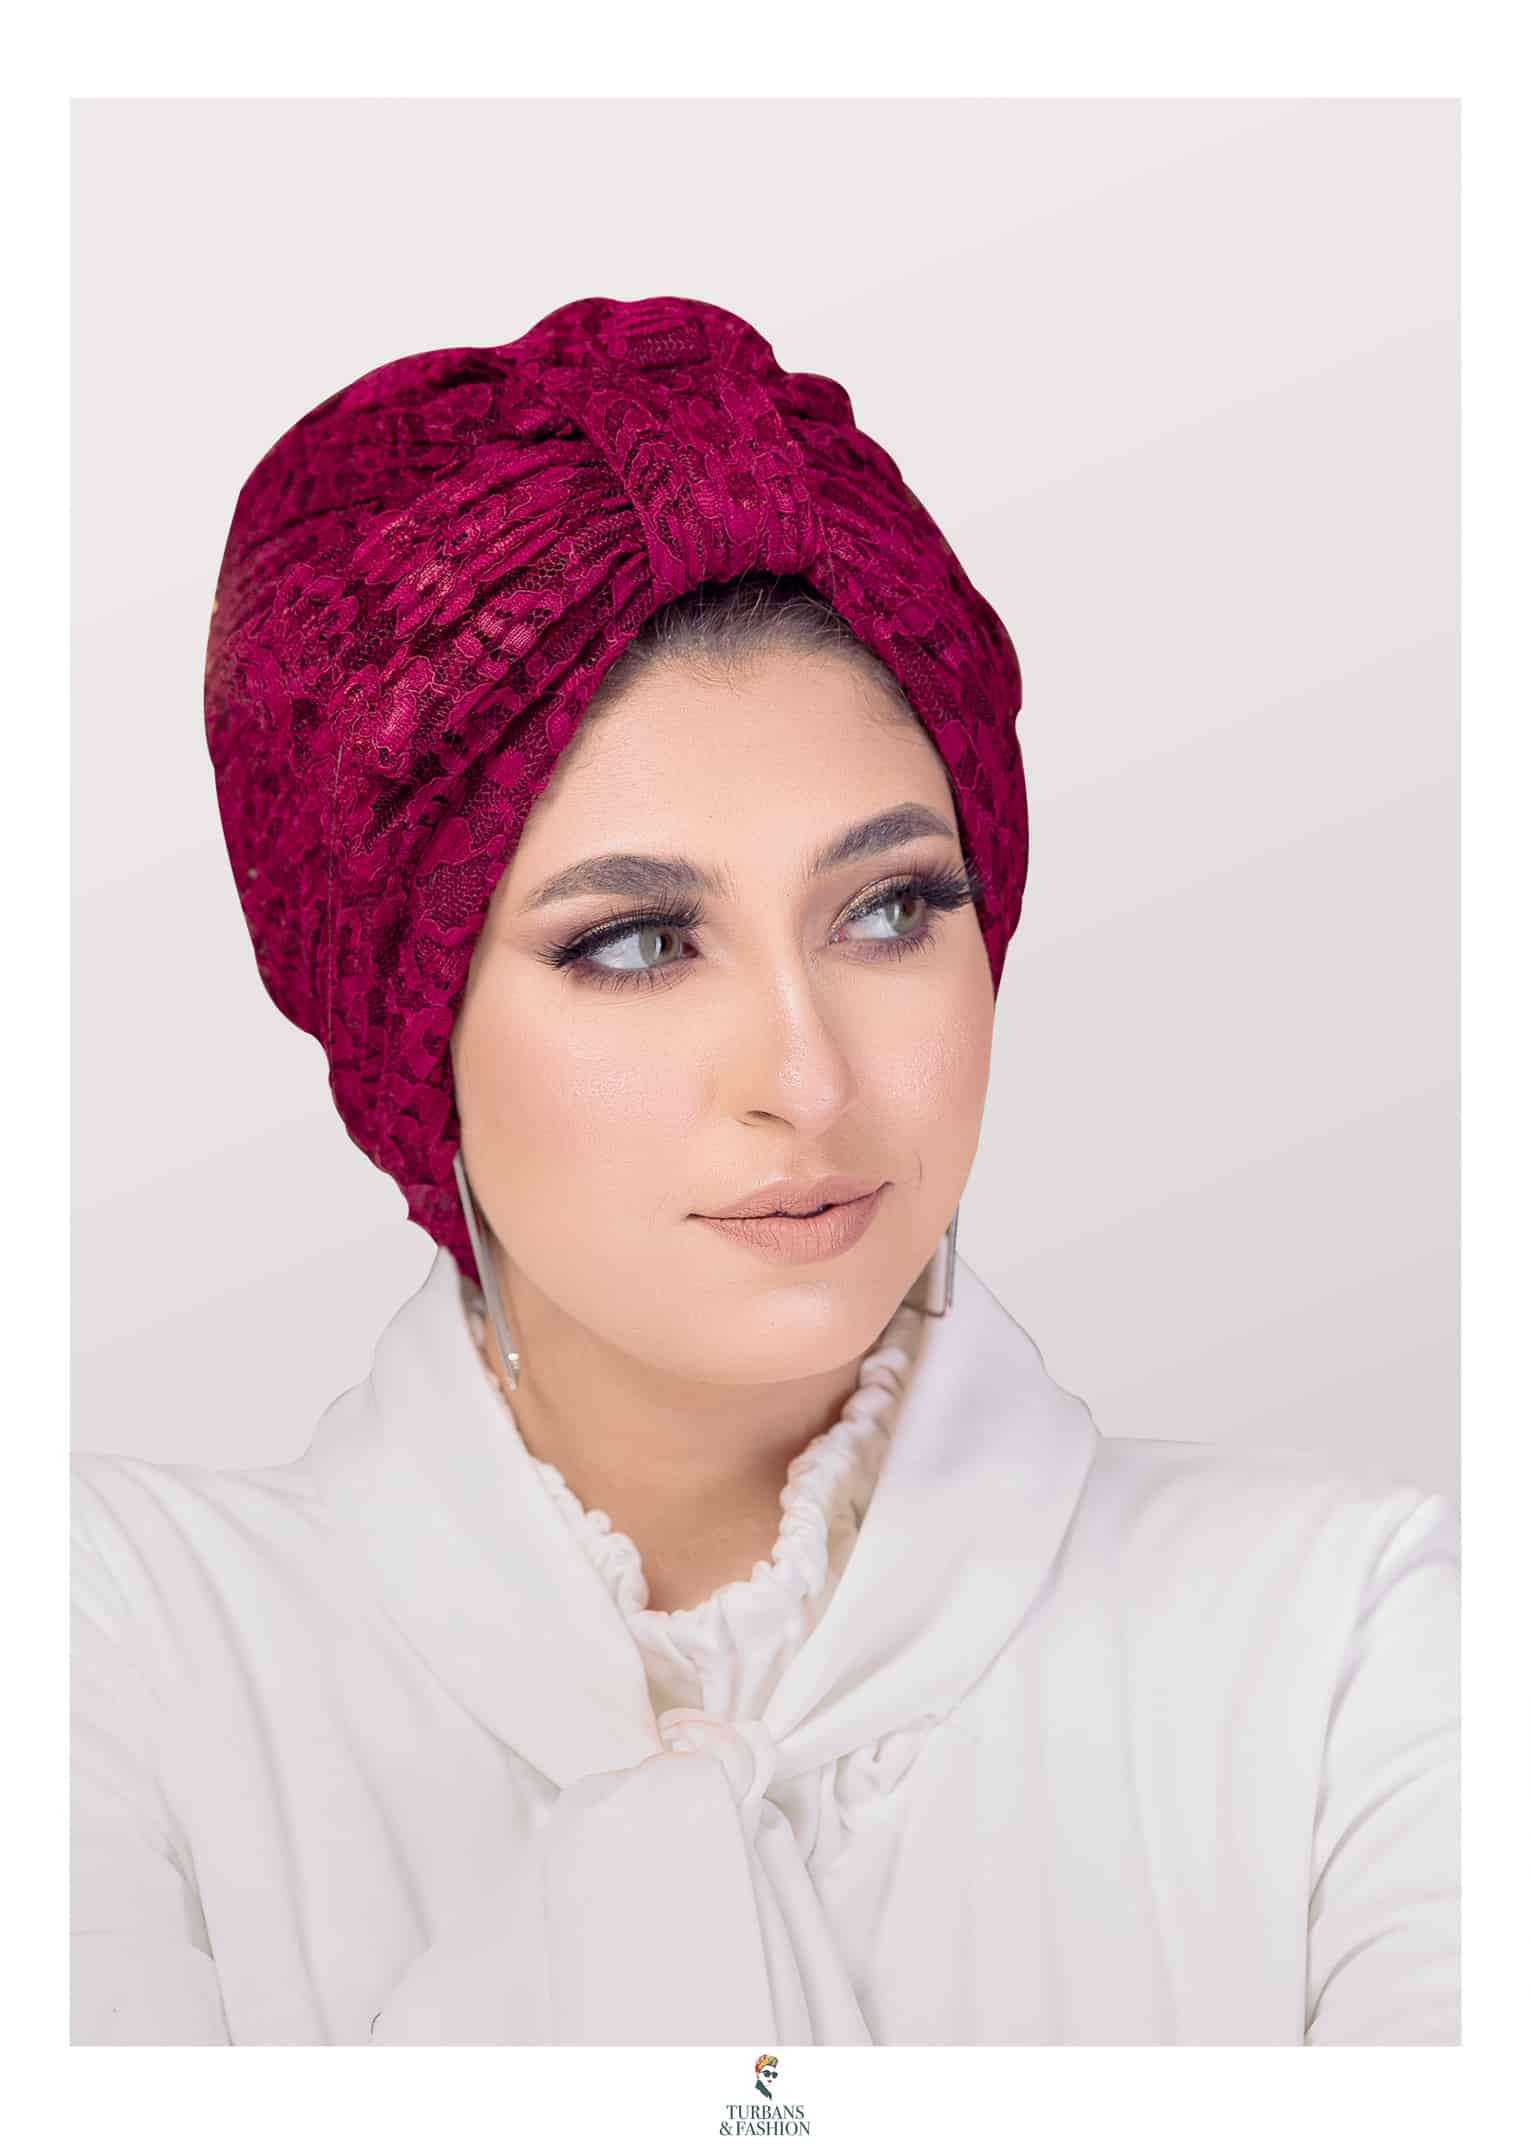 Women’s Half Bow Glamorous Dantelle Lace Fabric Formal-Look One-Piece Turban Head Wrap